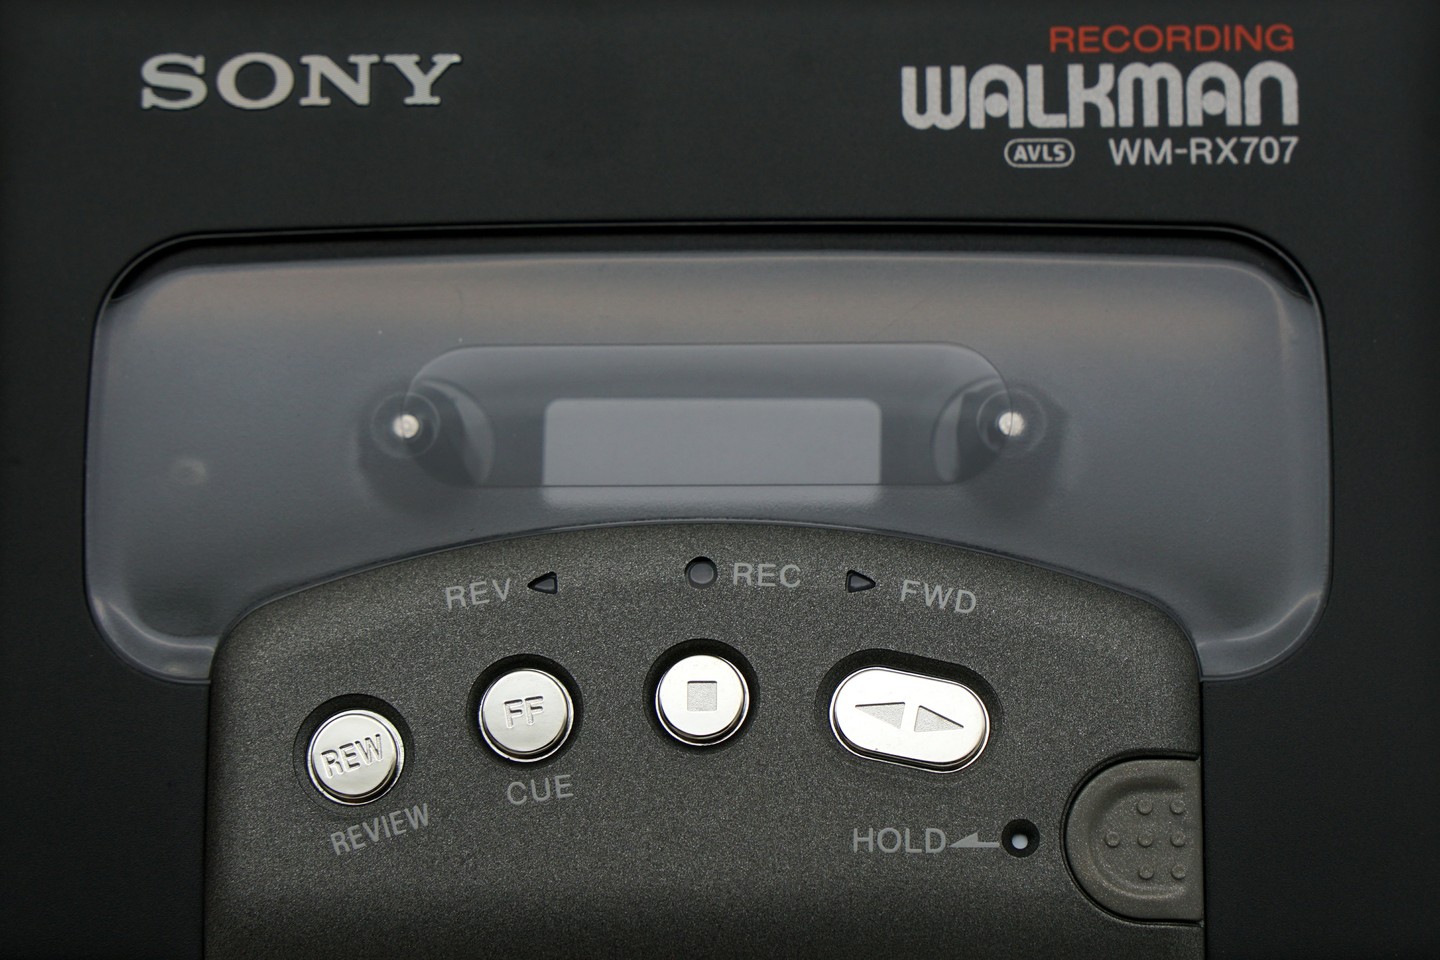 Sony_WM-RX707_-_Front_focus_window_and_logic_controls_ig-boxedwalkman